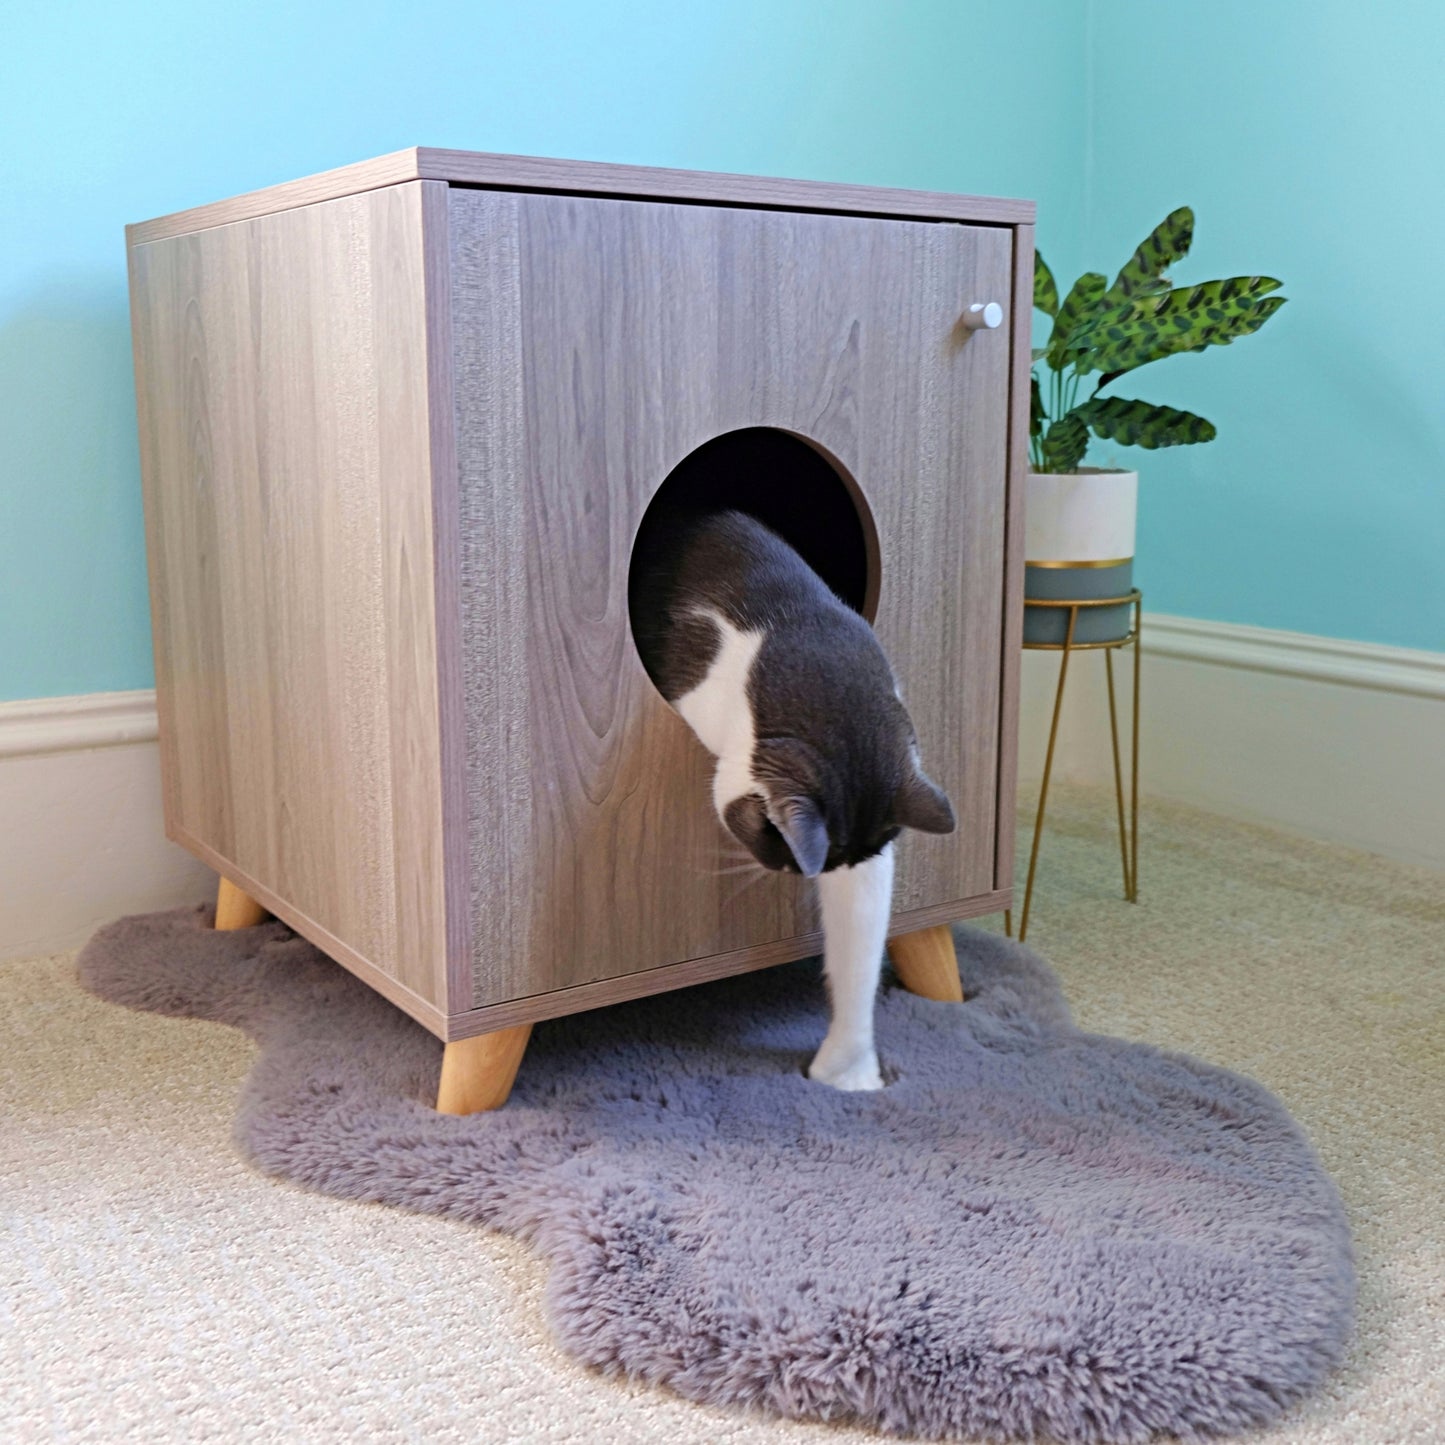 Midlee Hidden Cat Litter Box Furniture Enclosure